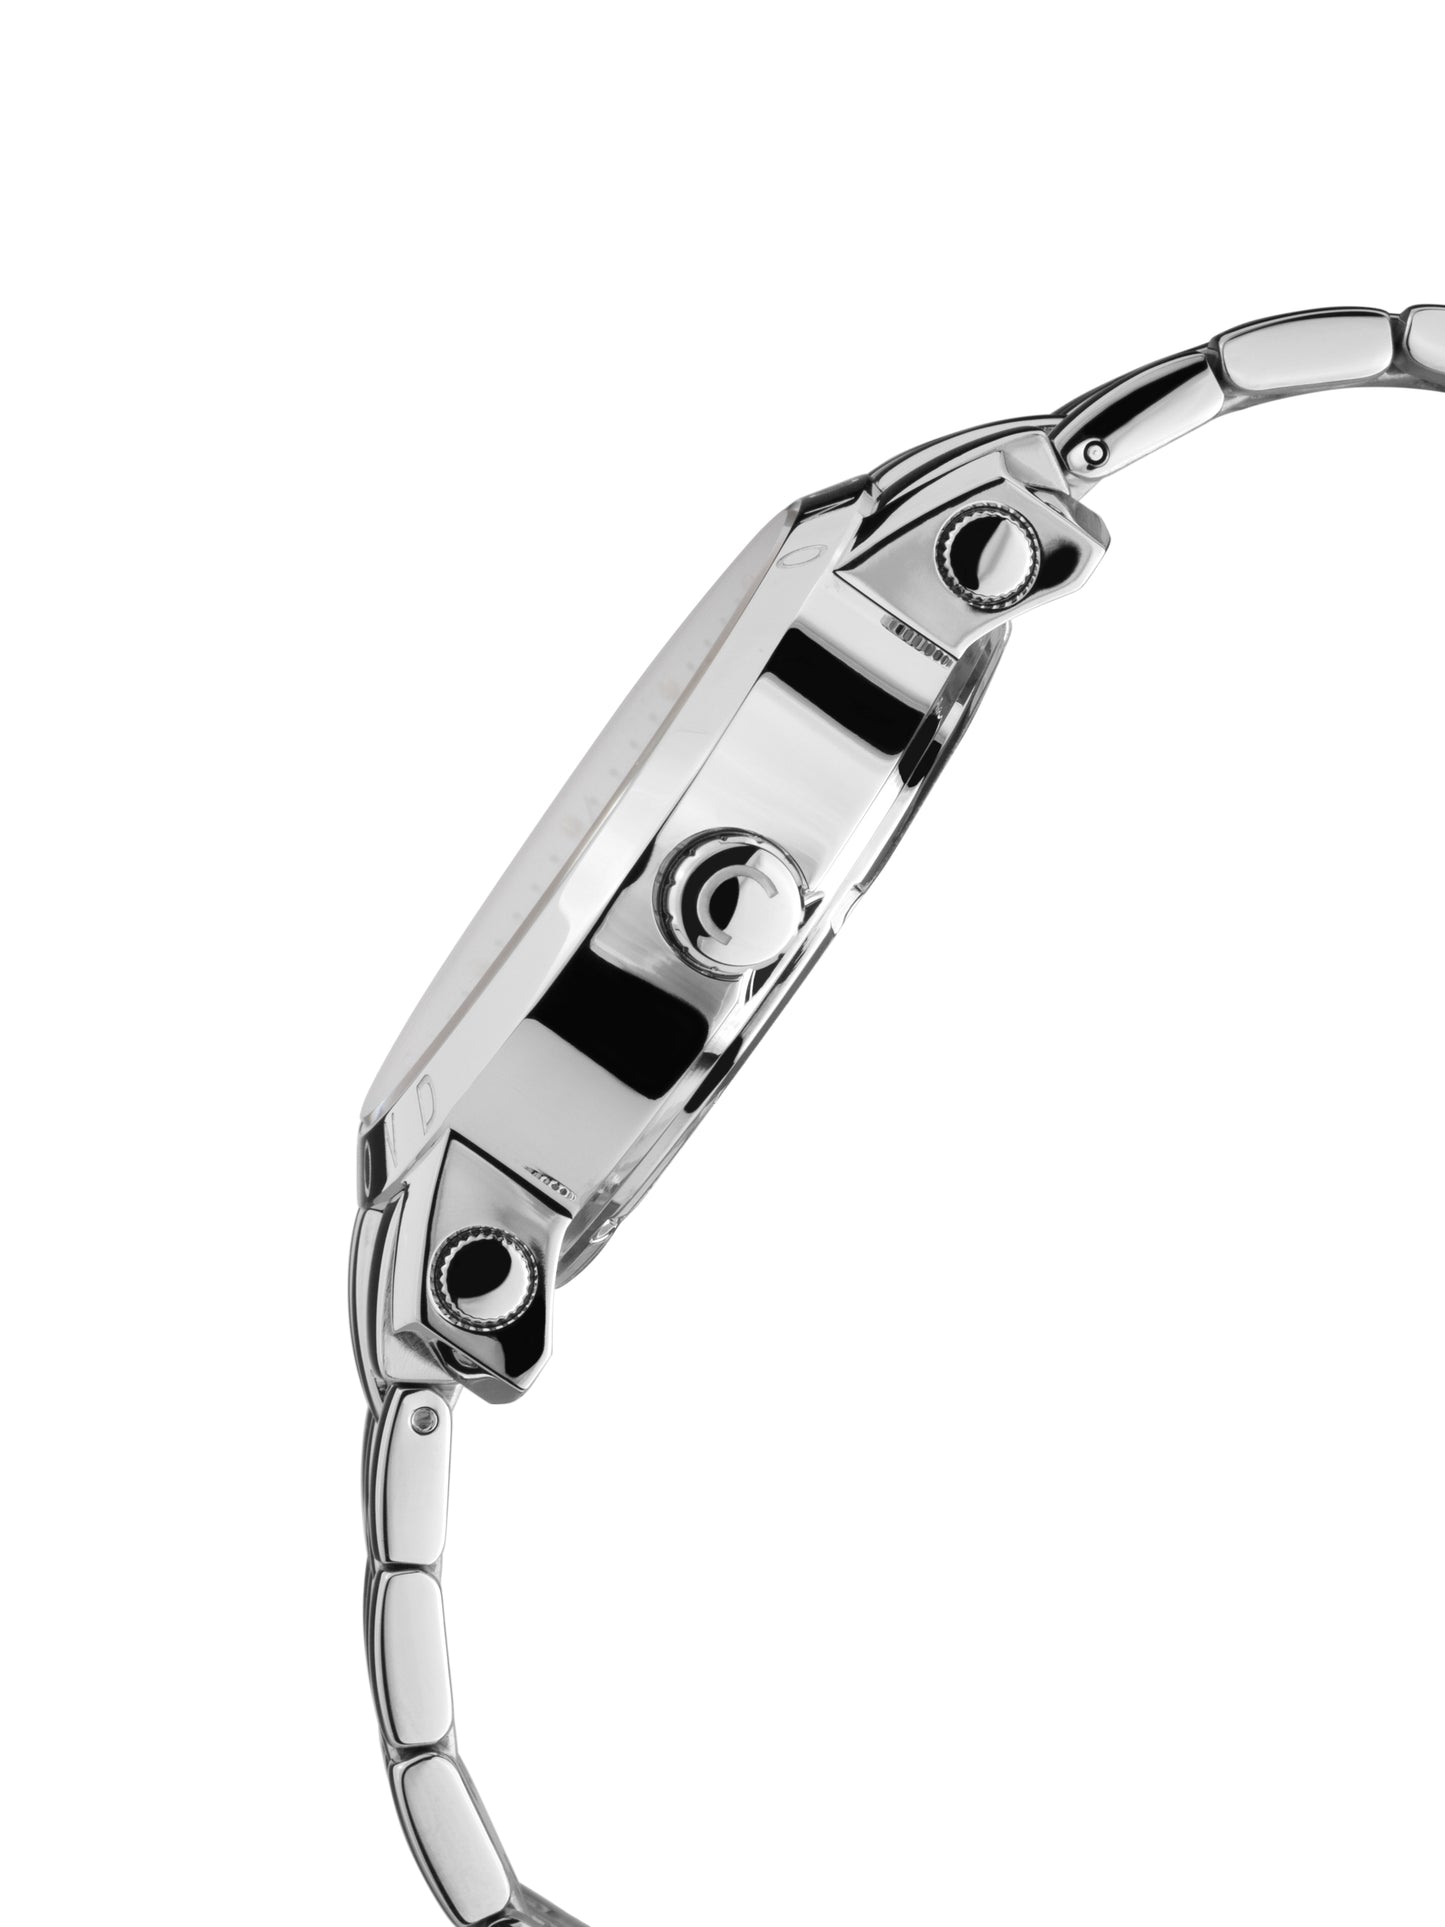 Automatic watches — Nestorius — Chrono Diamond — steel silver